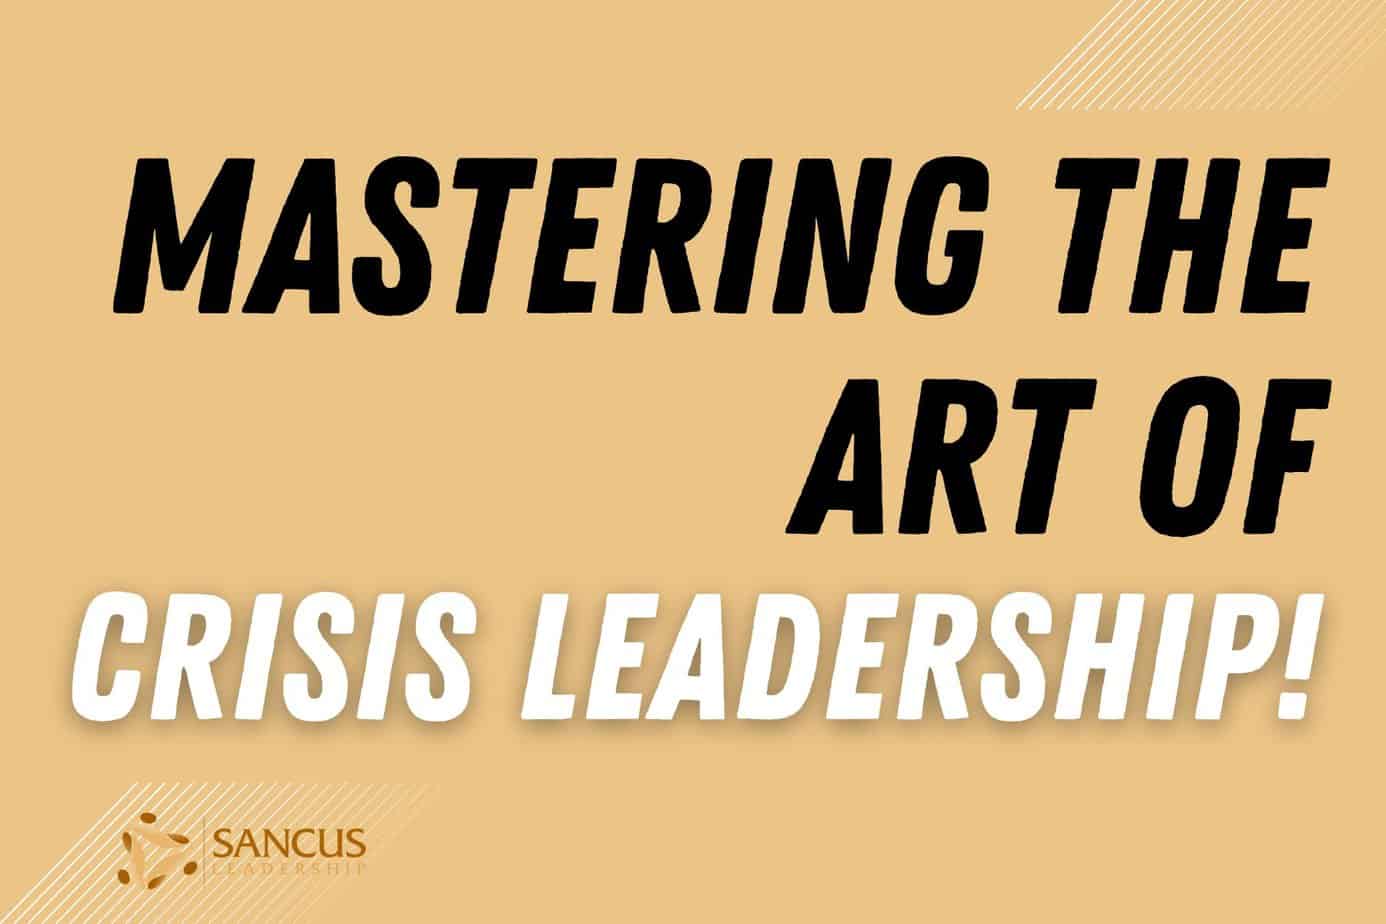 Master Crisis Leadership! (Tasks, Roles & Experiences)